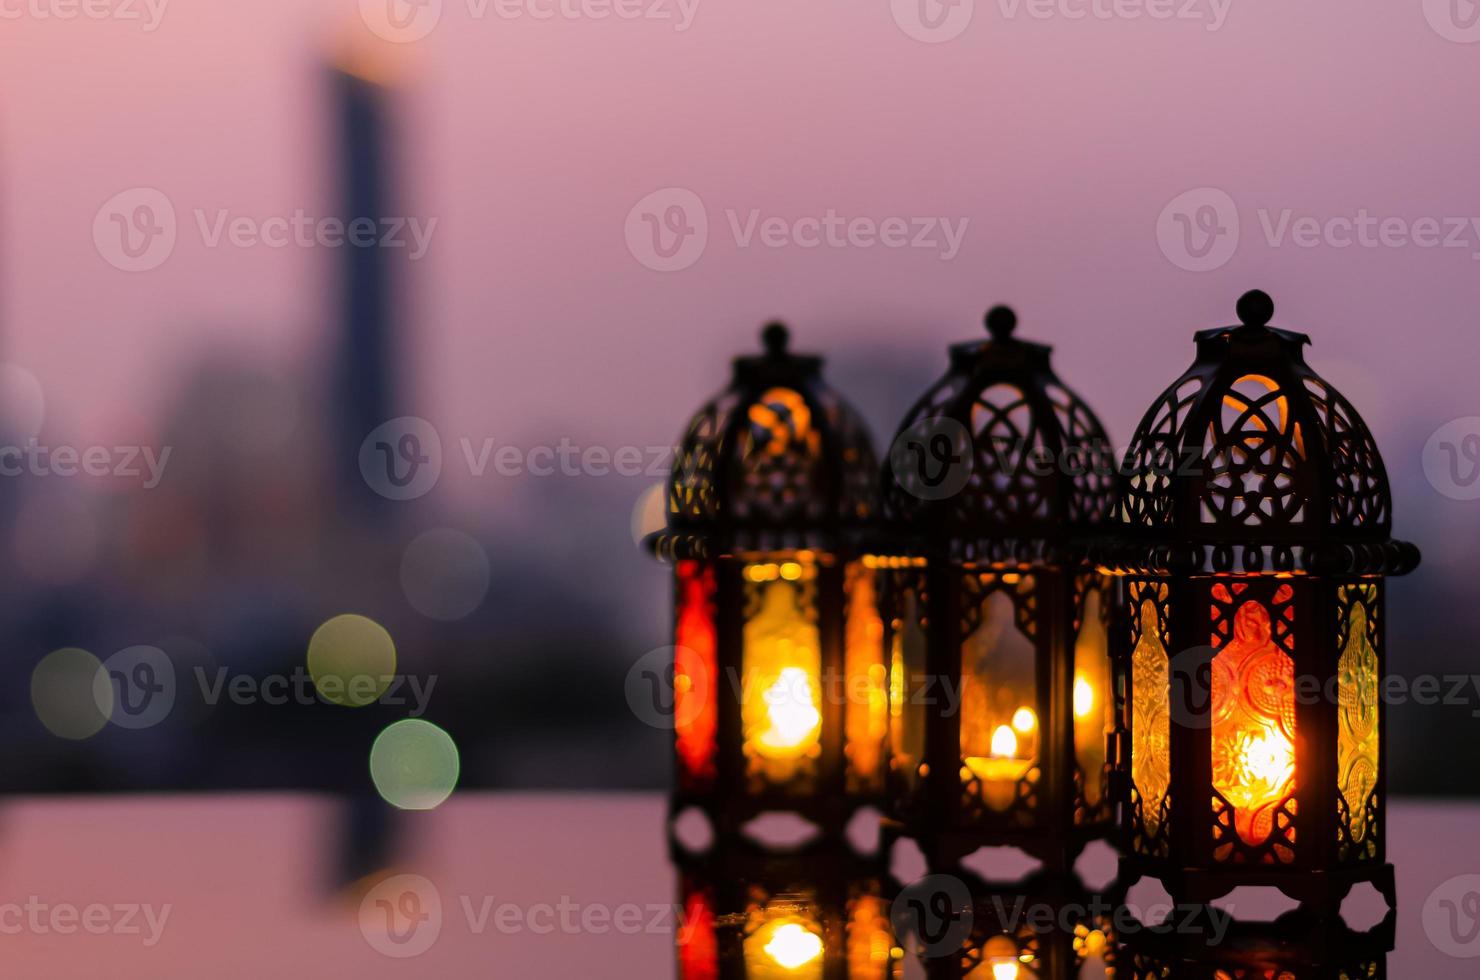 lanternas com céu crepúsculo e fundo claro de bokeh da cidade para a festa muçulmana do mês sagrado do ramadã kareem. foto